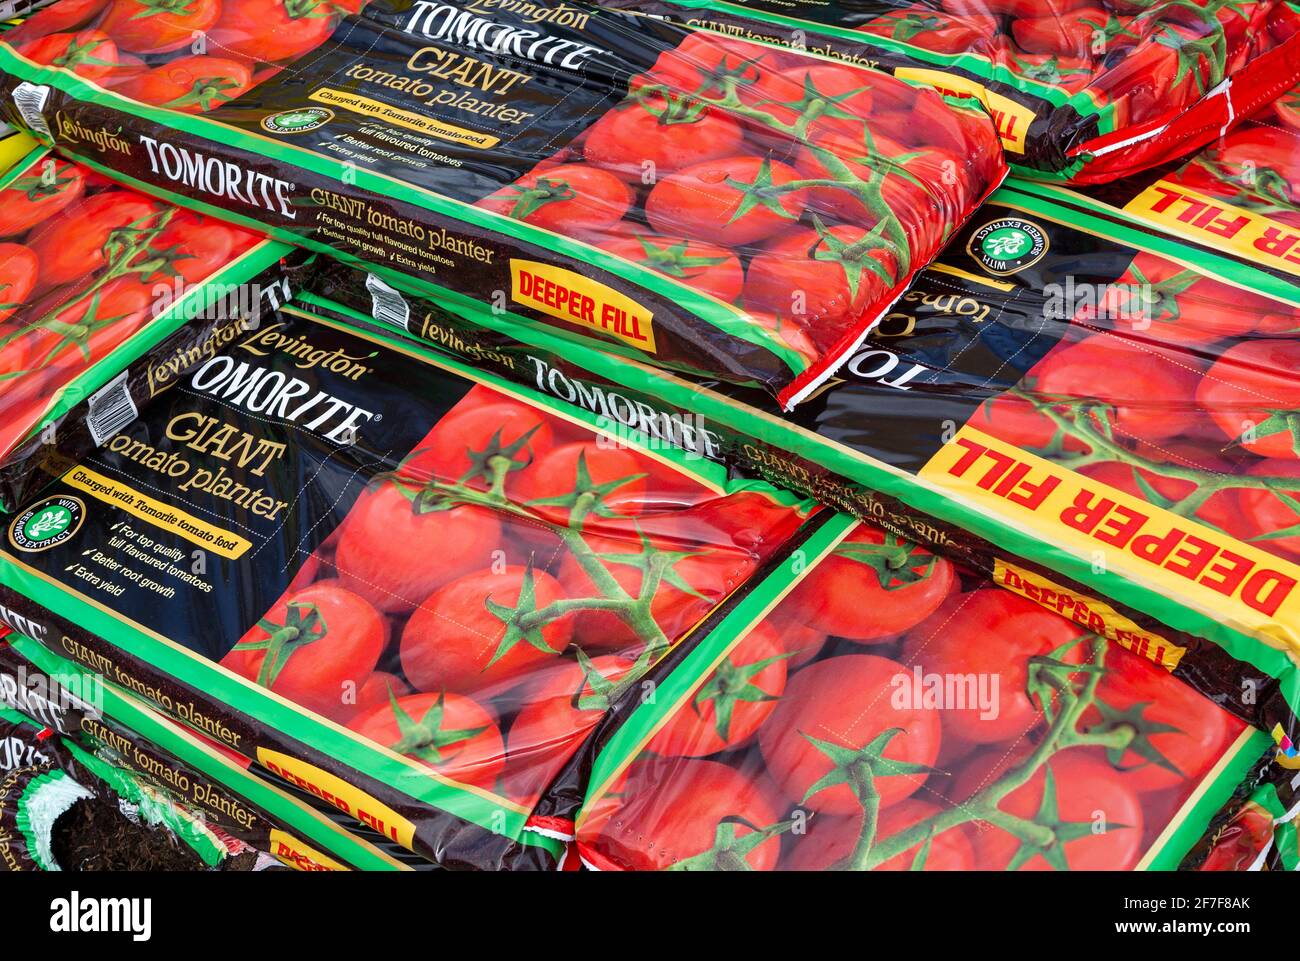 https://c8.alamy.com/comp/2F7F8AK/bags-of-levington-tomorite-giant-tomato-planter-grow-bags-stacked-up-uk-2F7F8AK.jpg